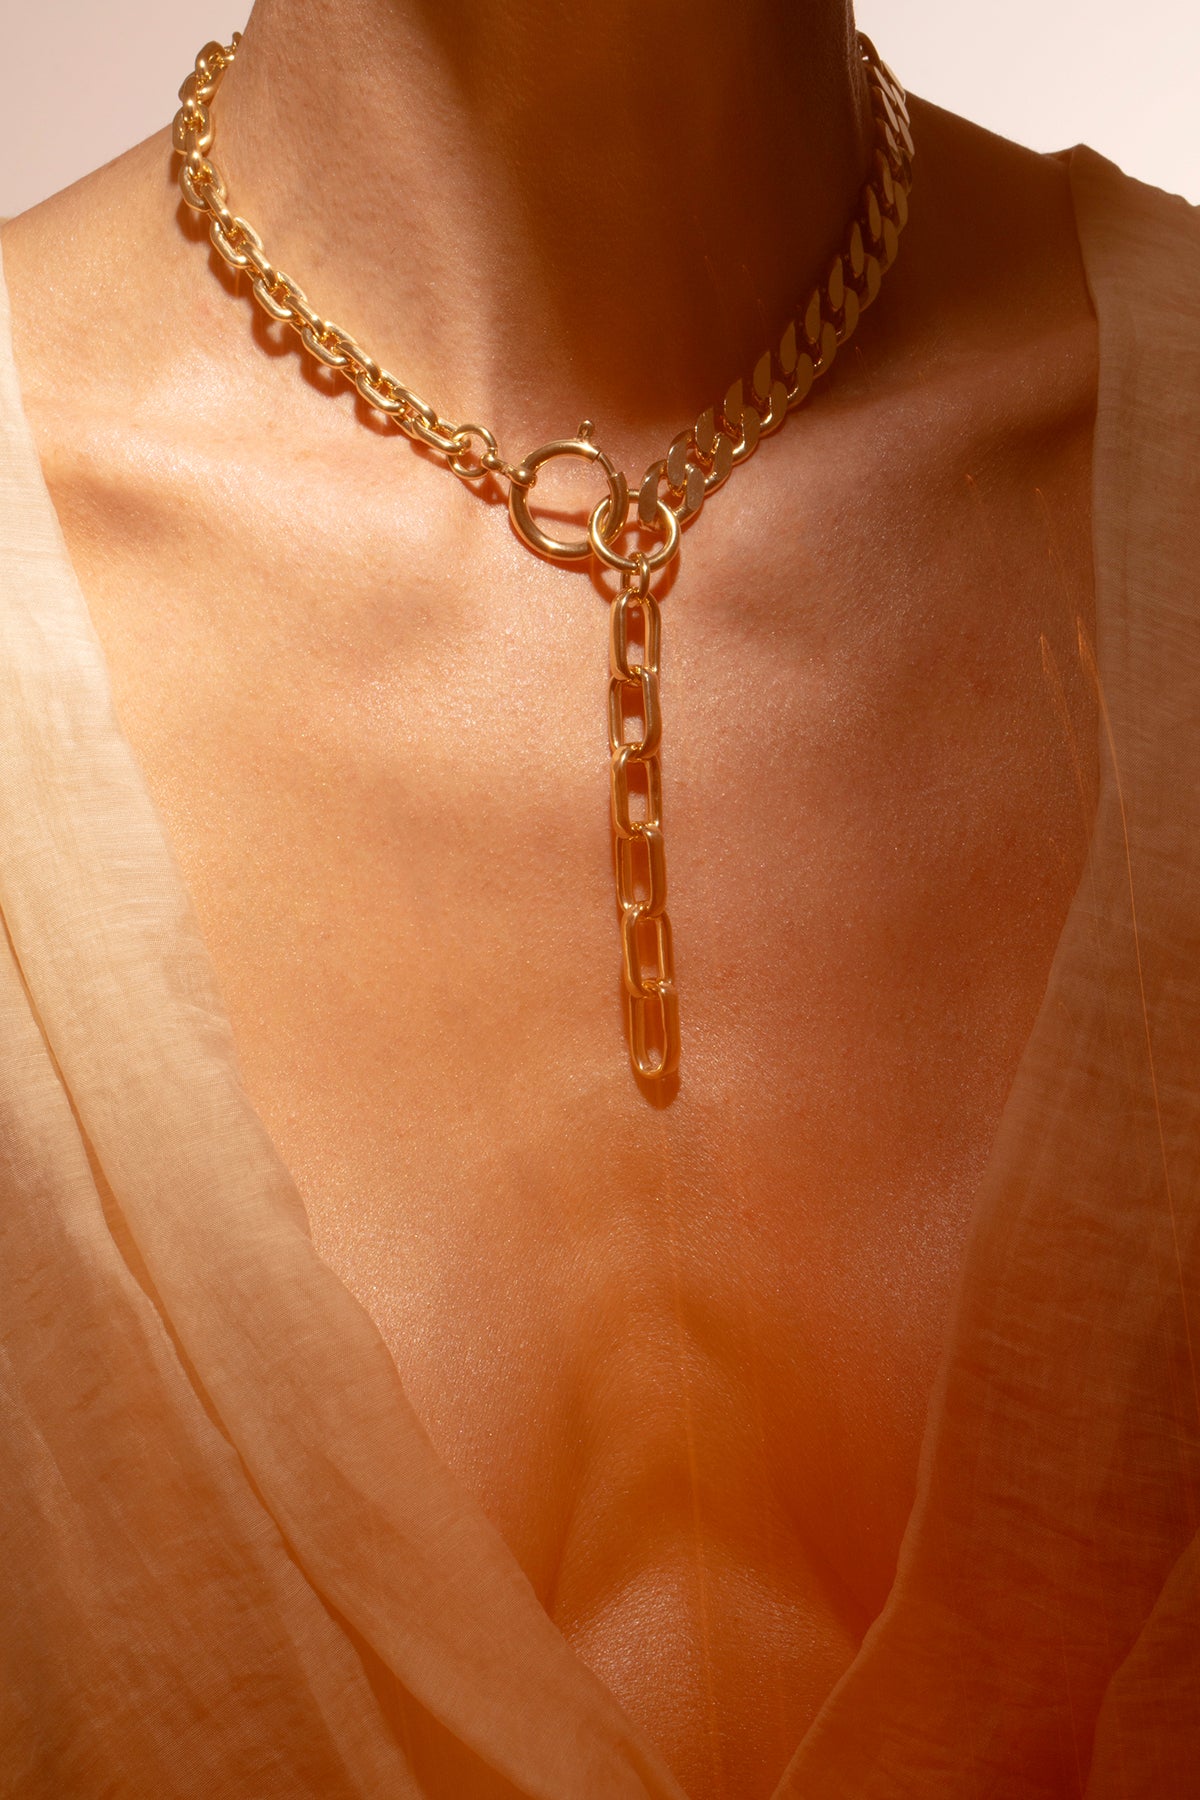 Strangler mix necklace gold